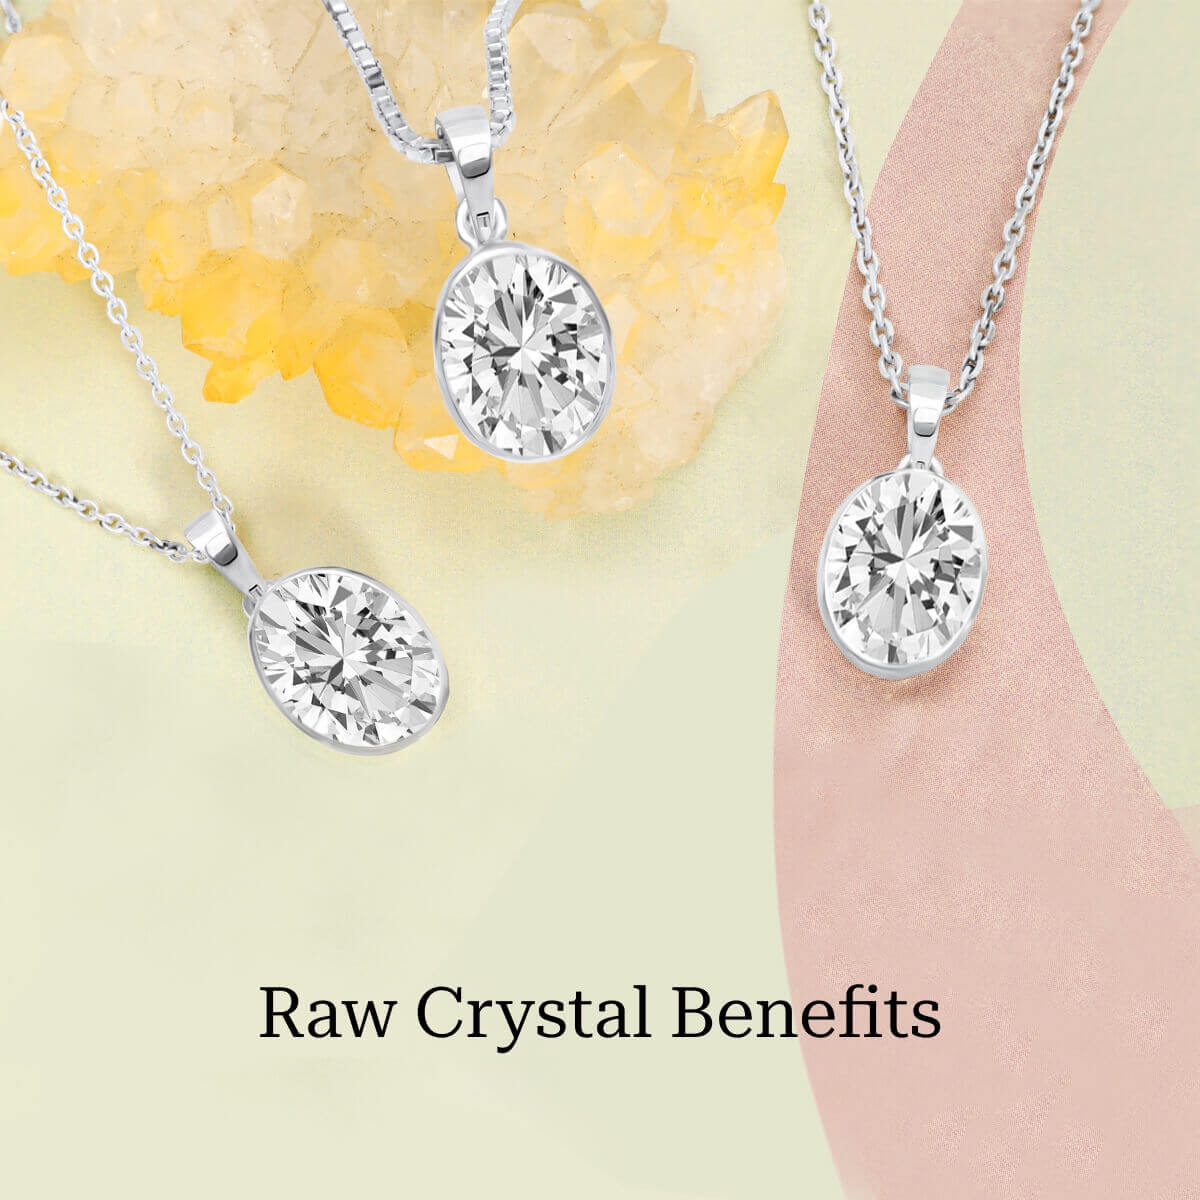 Benefits of Raw Crystal Jewelry